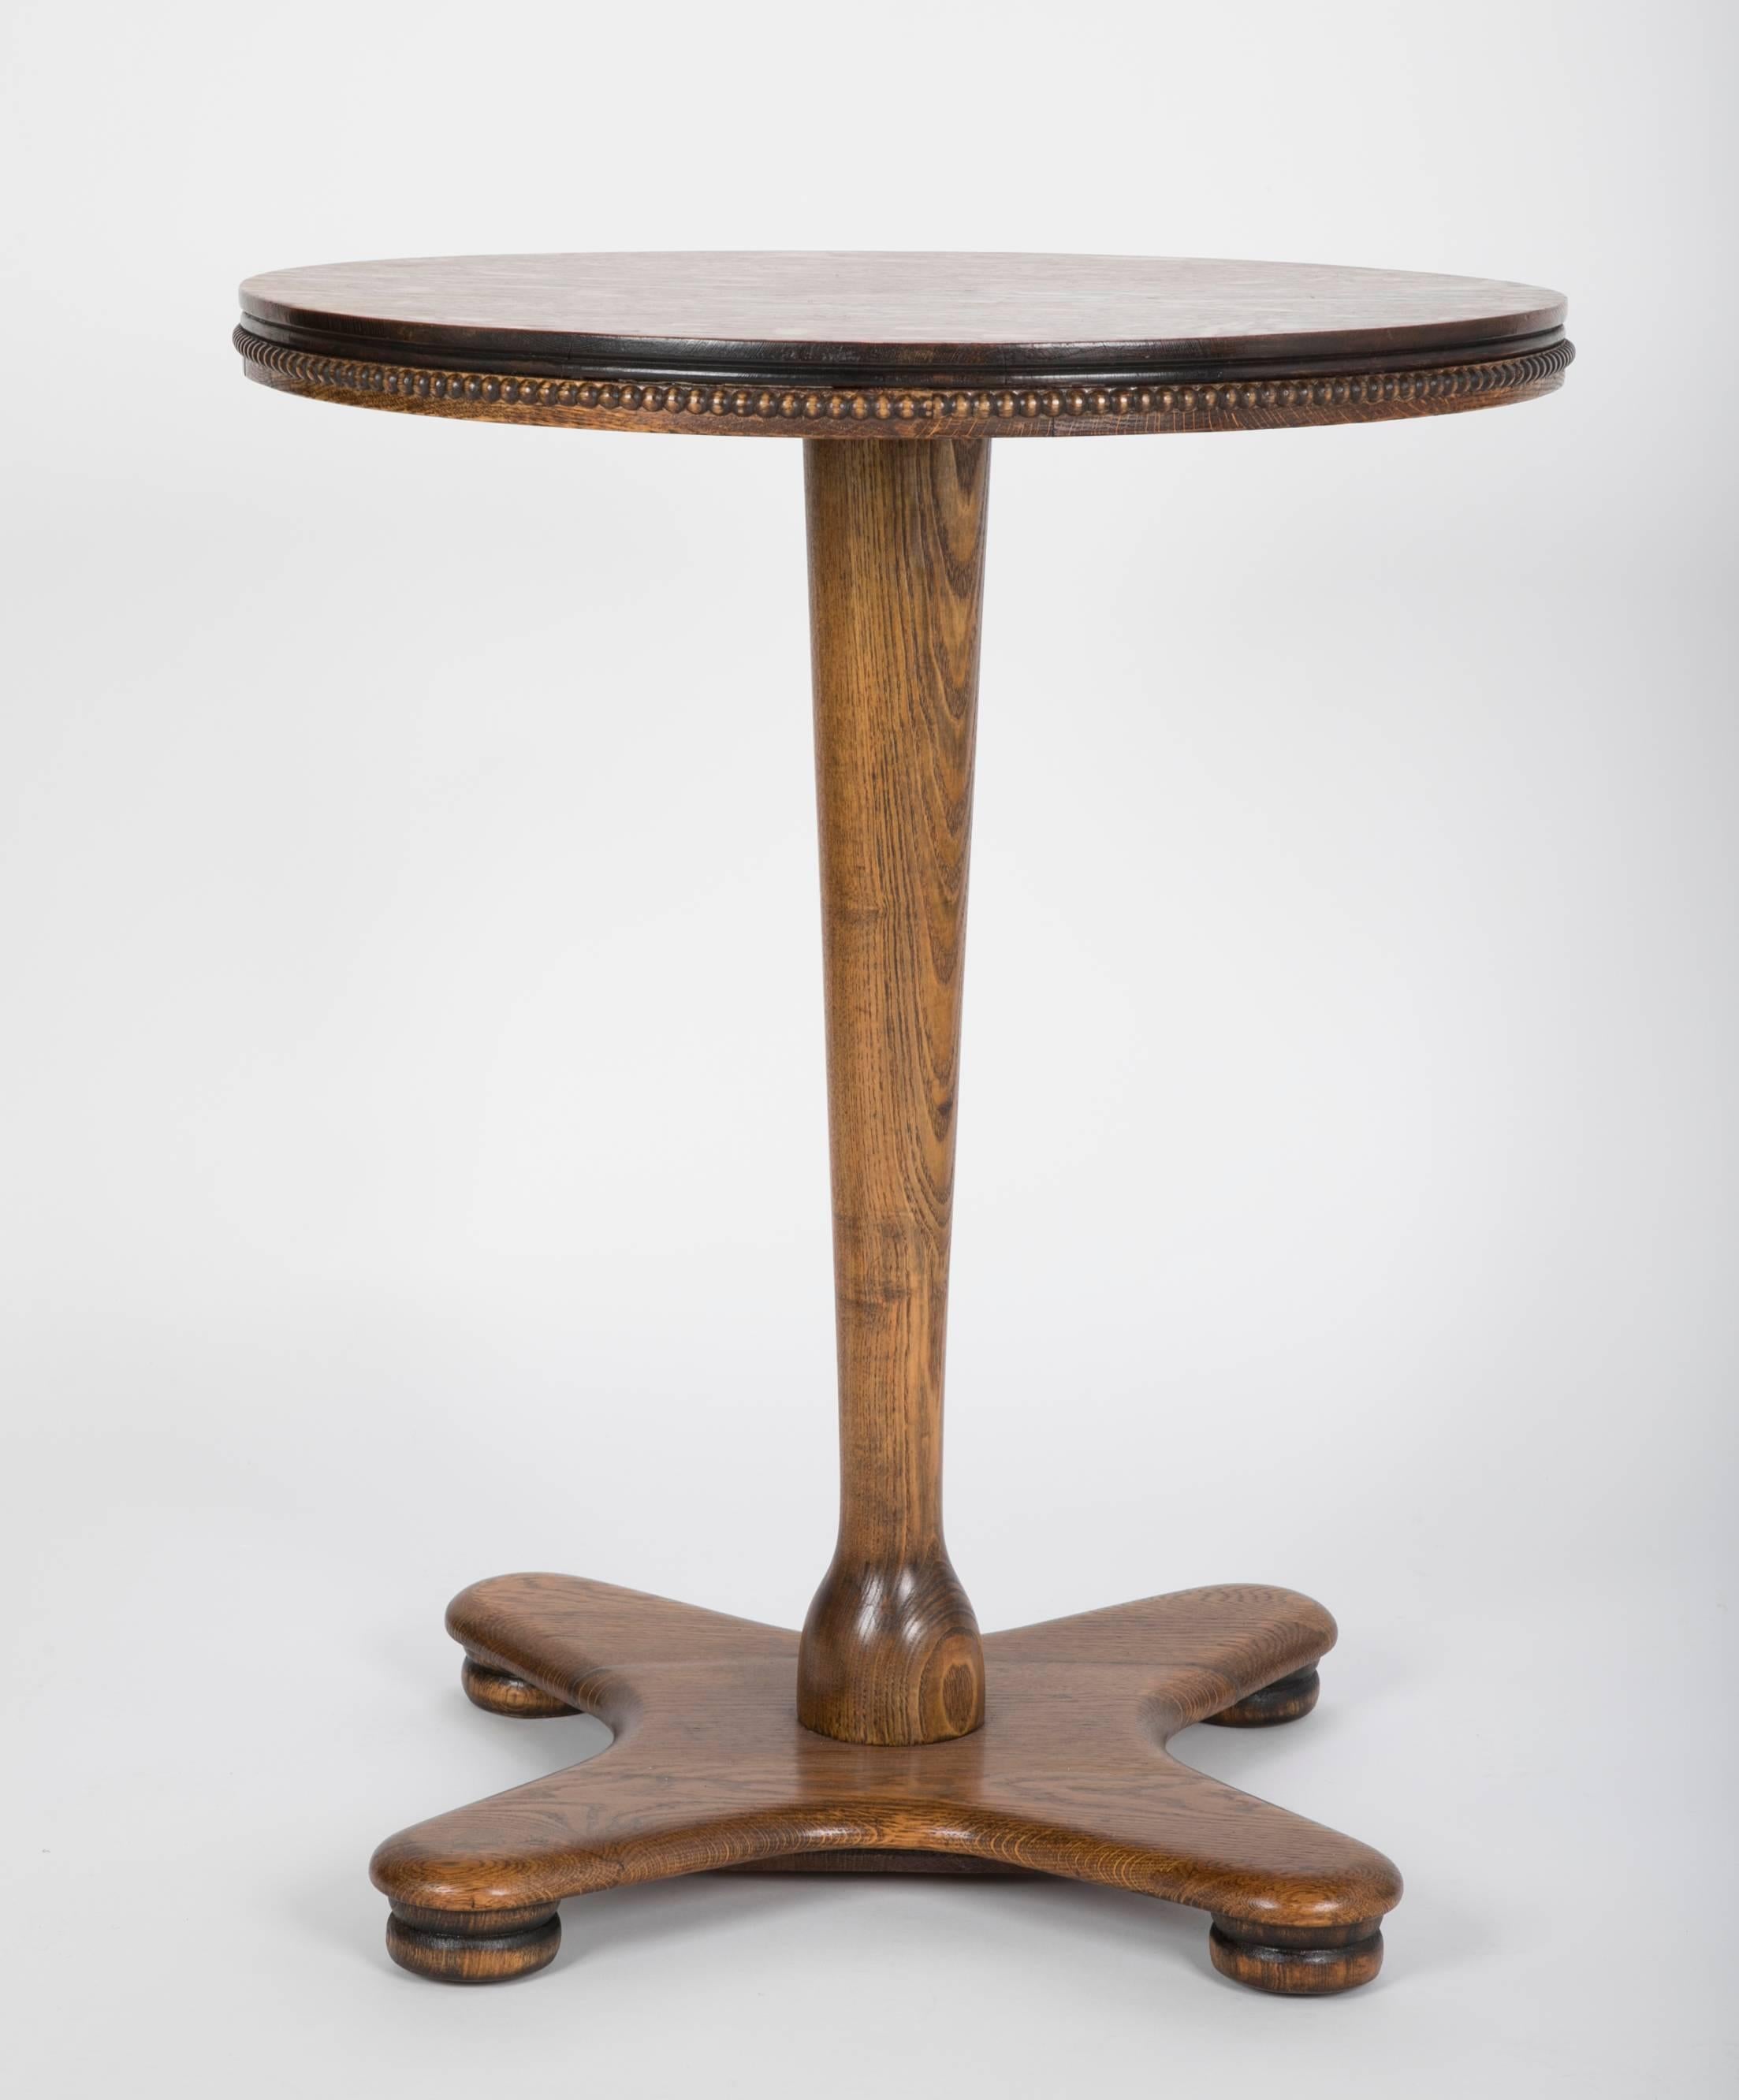 An Arts & Crafts quarter sawn oak side table, with interesting amoeba form base.